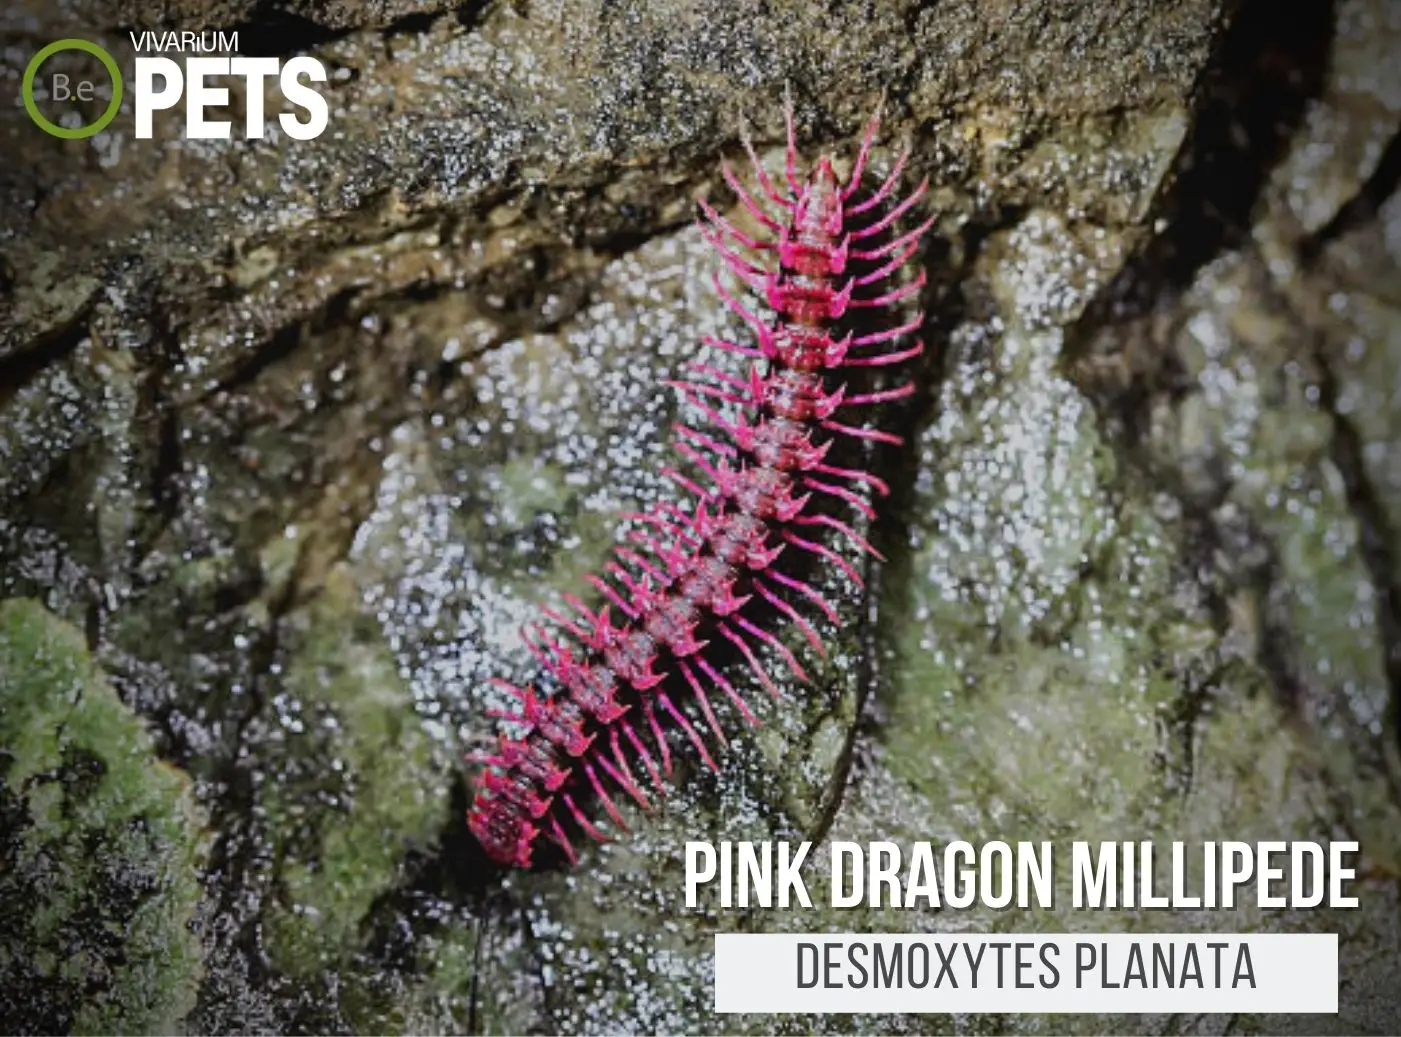 Desmoxytes Planata "Pink Dragon Millipede" Care Guide